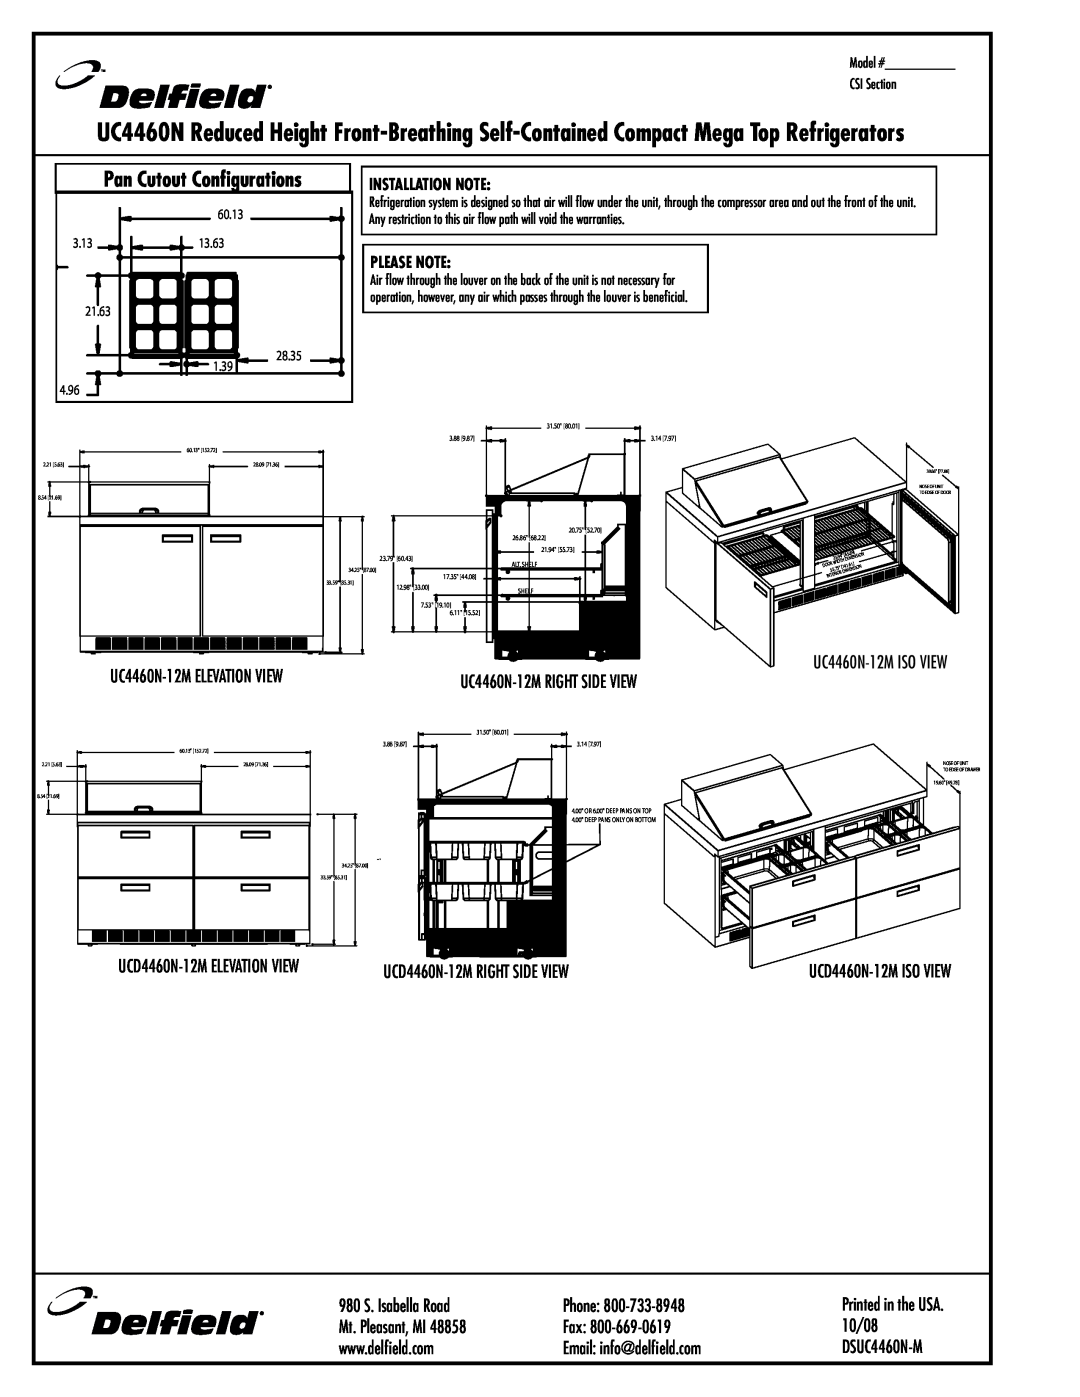 Delfield UCD4460N-24M Pan Cutout Configurations, UCD4460N-12M ELEVATION VIEW, Model # CSI Section,     